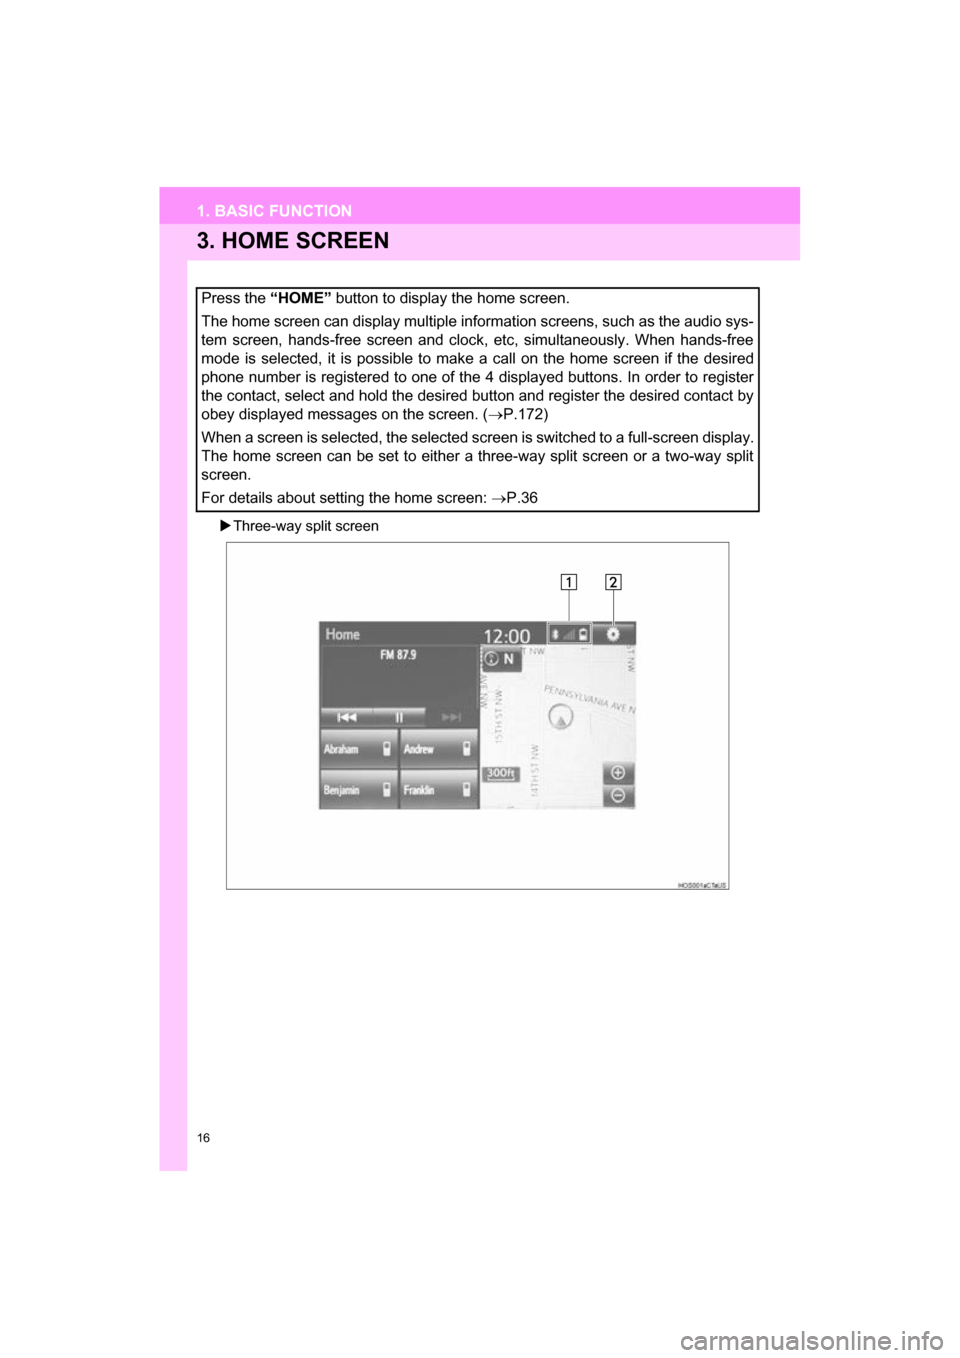 TOYOTA CAMRY 2017 XV50 / 9.G Navigation Manual 16
1. BASIC FUNCTION
CAMRY_NAVI_U_OM33C67U
3. HOME SCREEN
Three-way split screen
Press the  “HOME” button to display the home screen.
The home screen can display multiple information screens, s